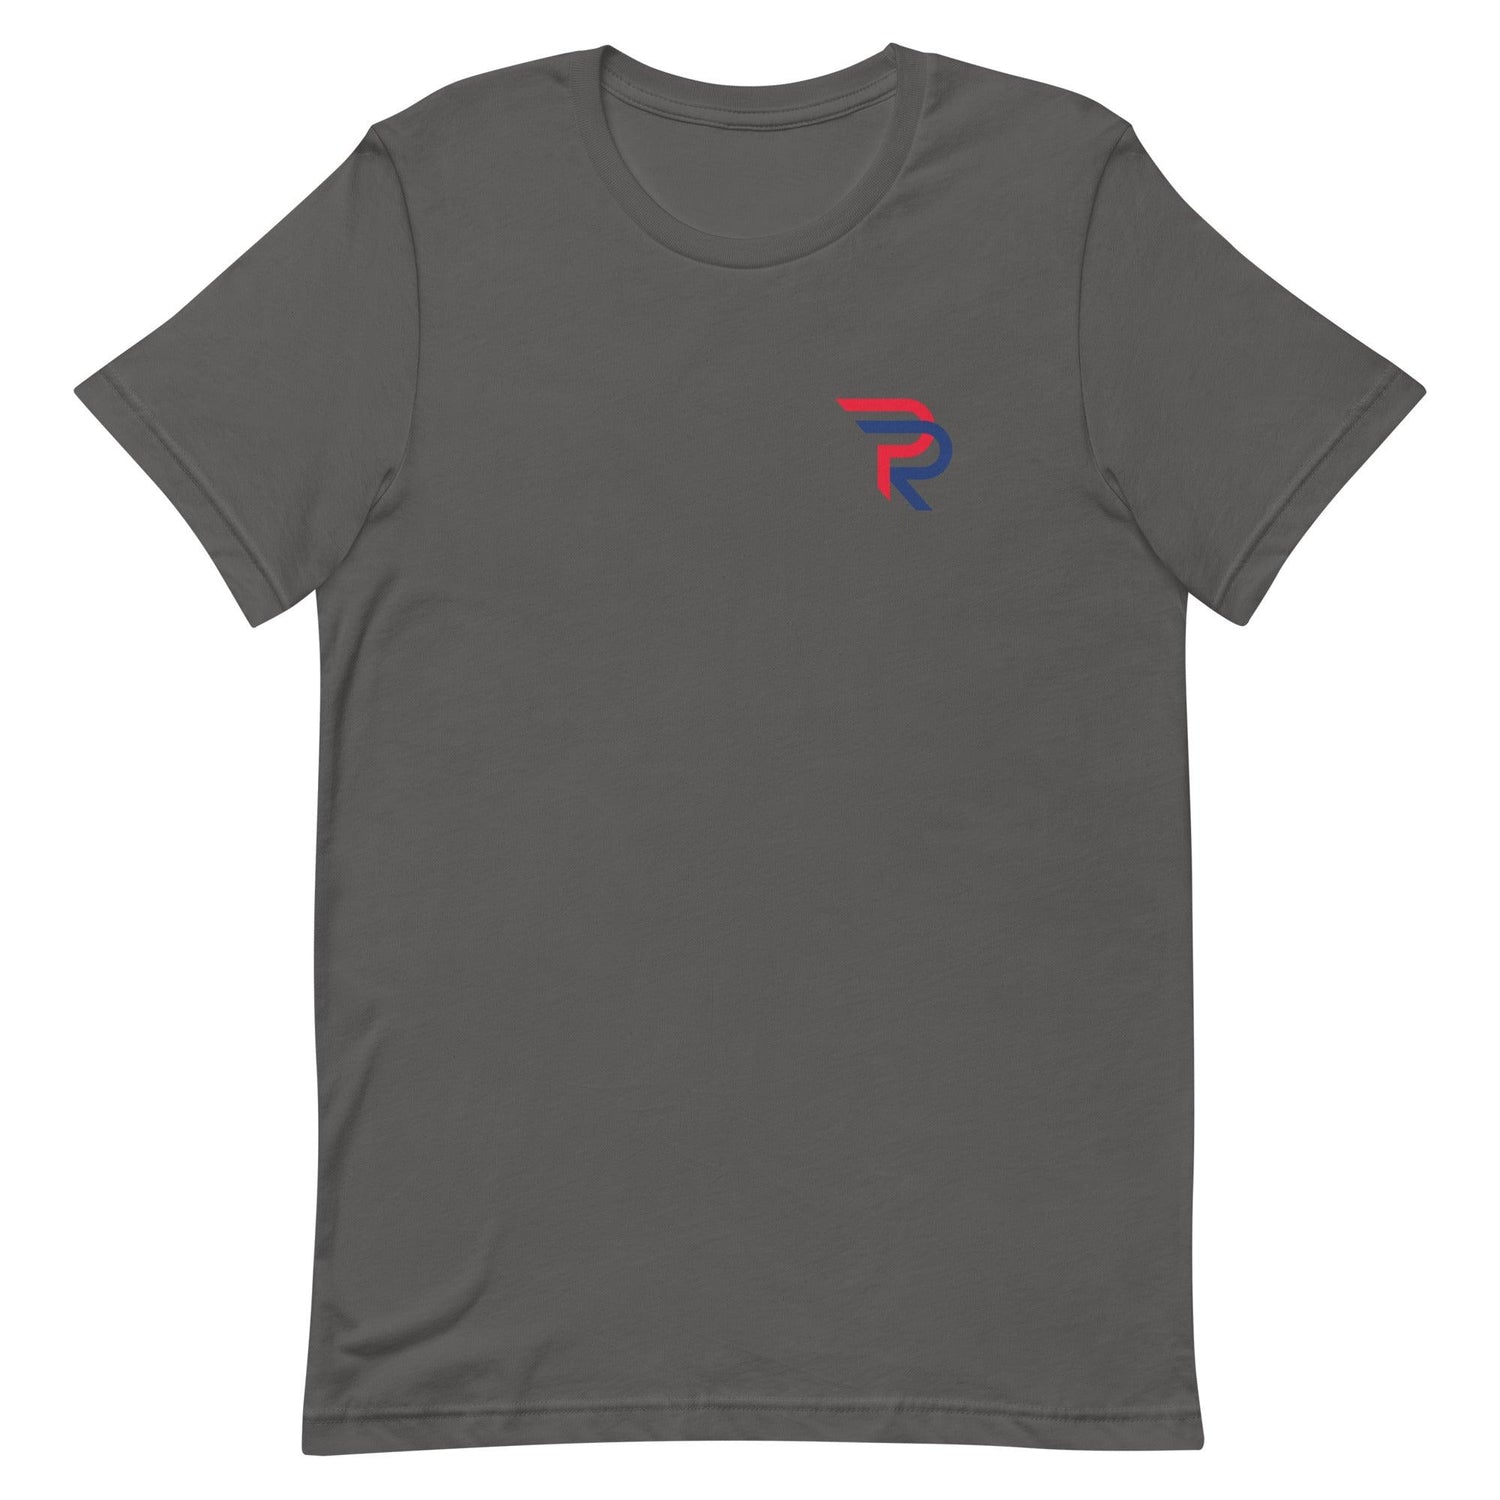 Robbie Peto "Essential" t-shirt - Fan Arch